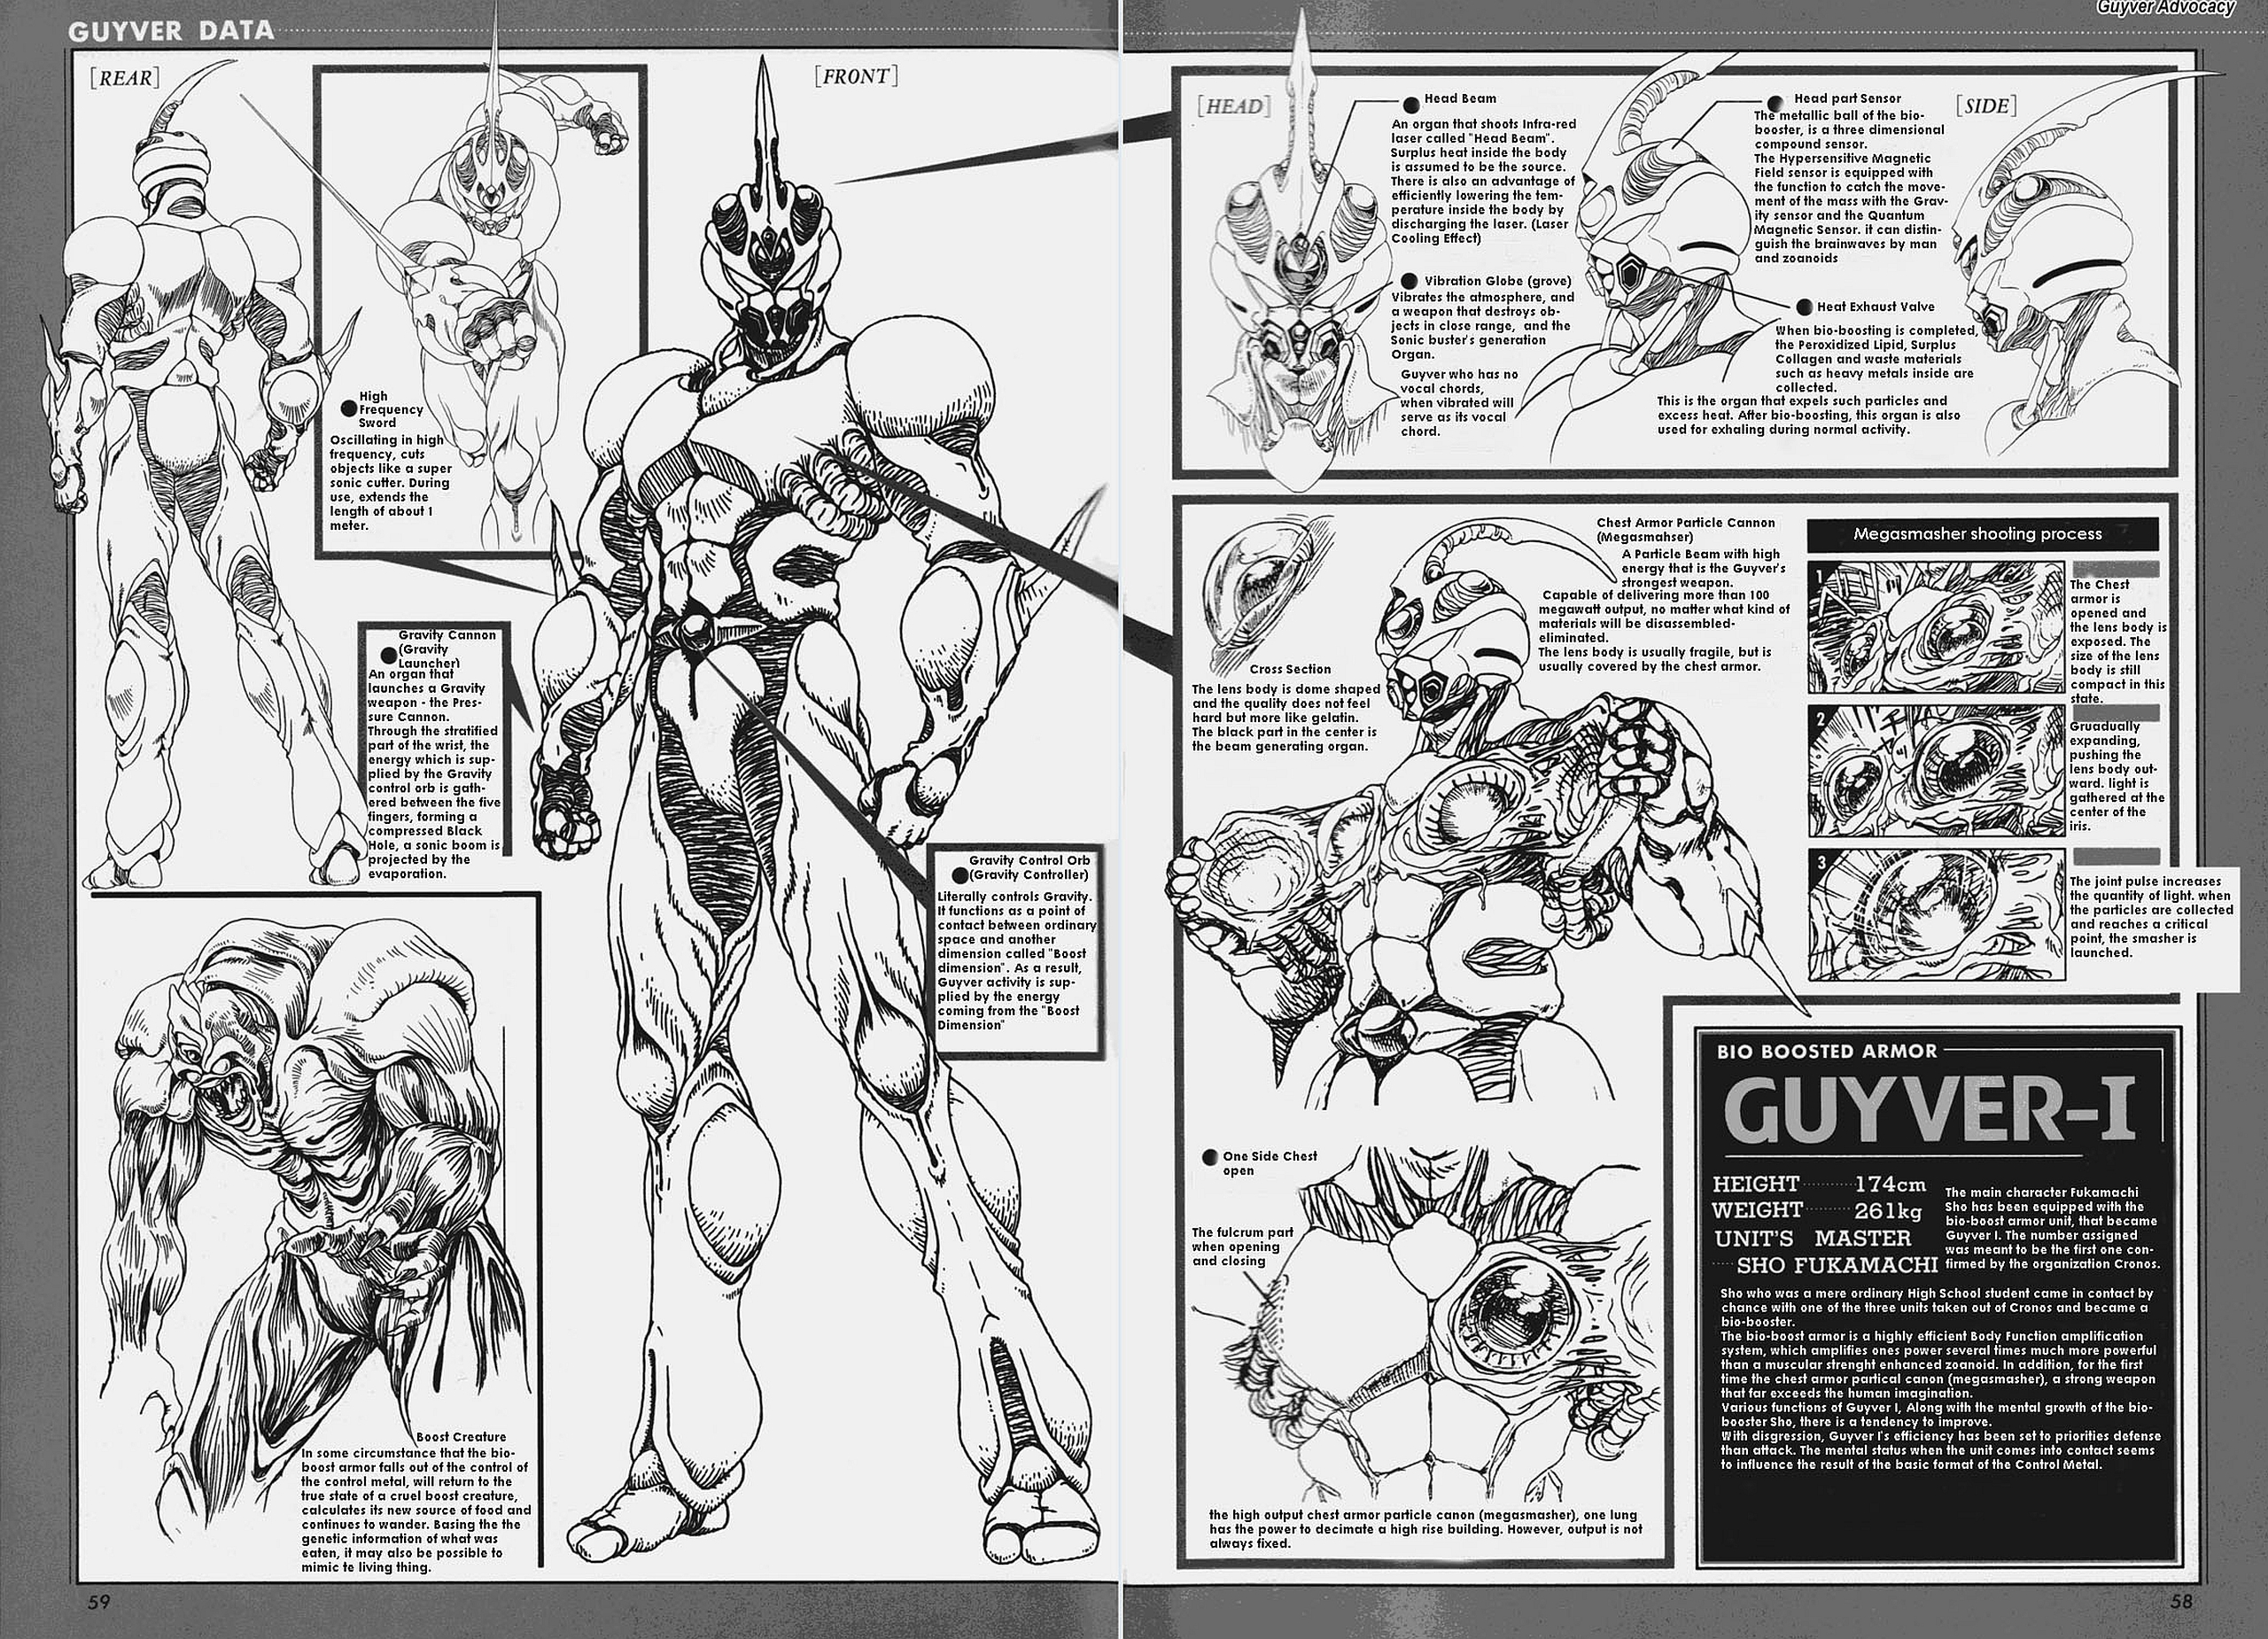 Best Guyver The Bioboosted Armor Full HD Wallpaper